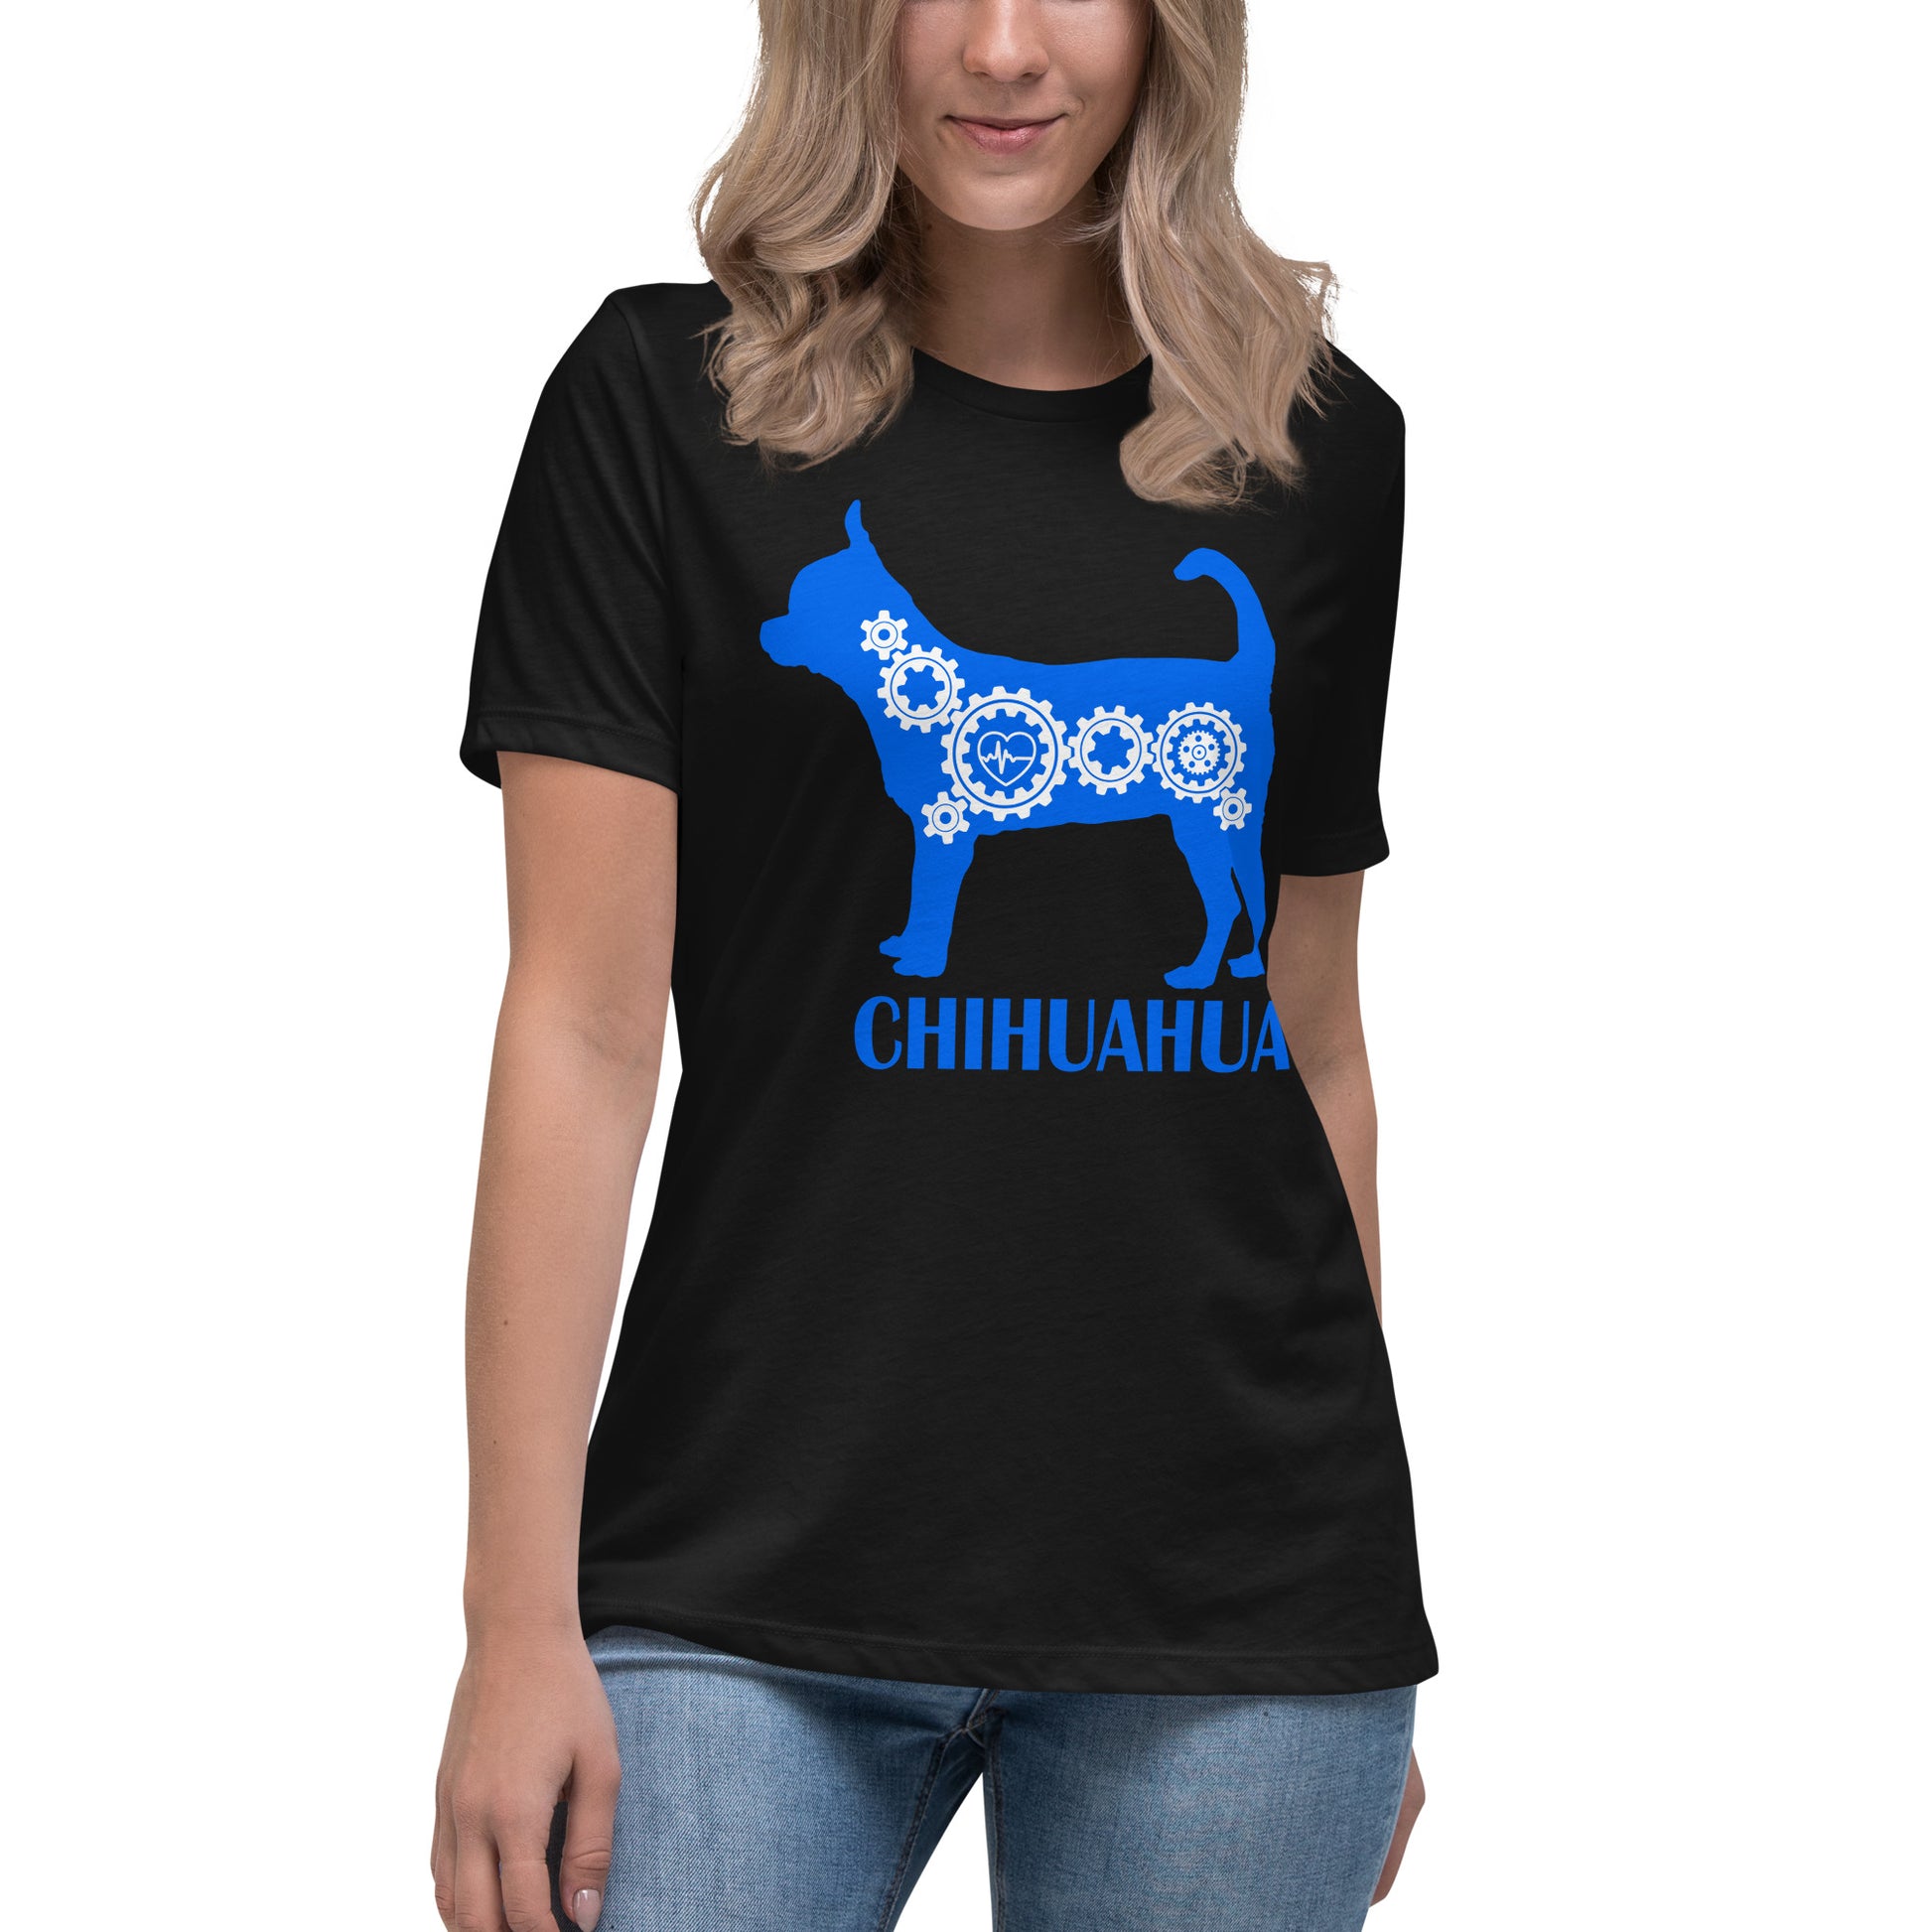 Chihuahua Bionic women’s black t-shirt by Dog Artistry.